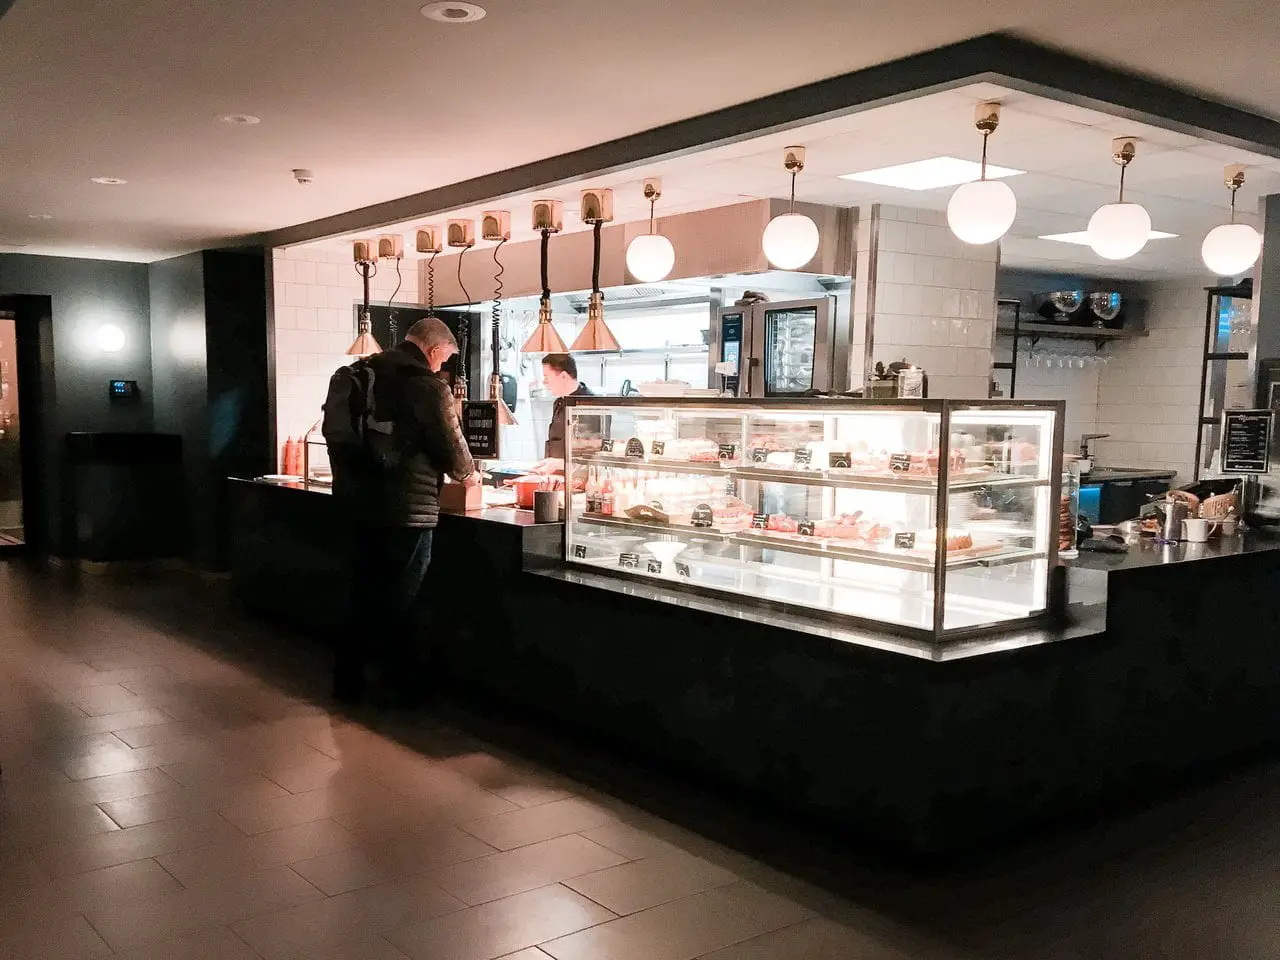 The serving counter inside Kaffistova Restaurant in Oslo Norway.